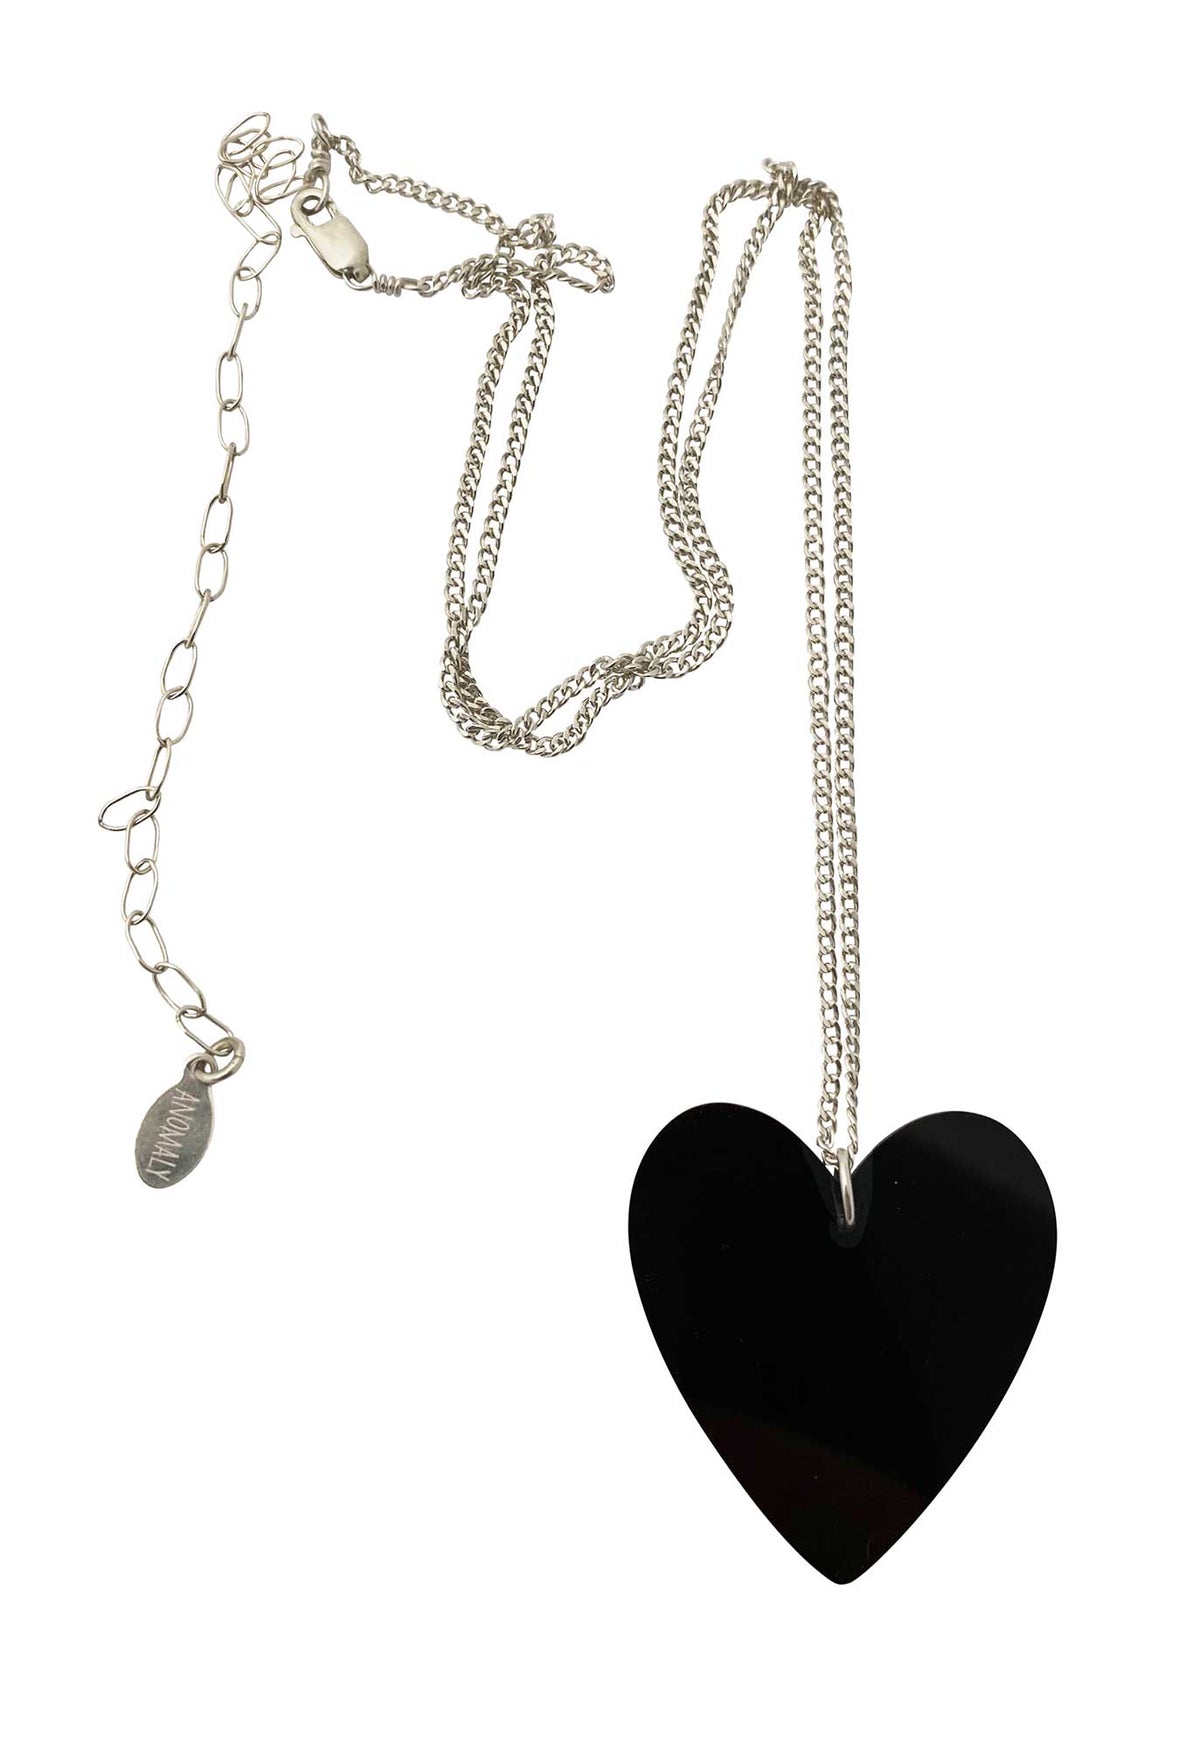 heart necklace black onyx charm 